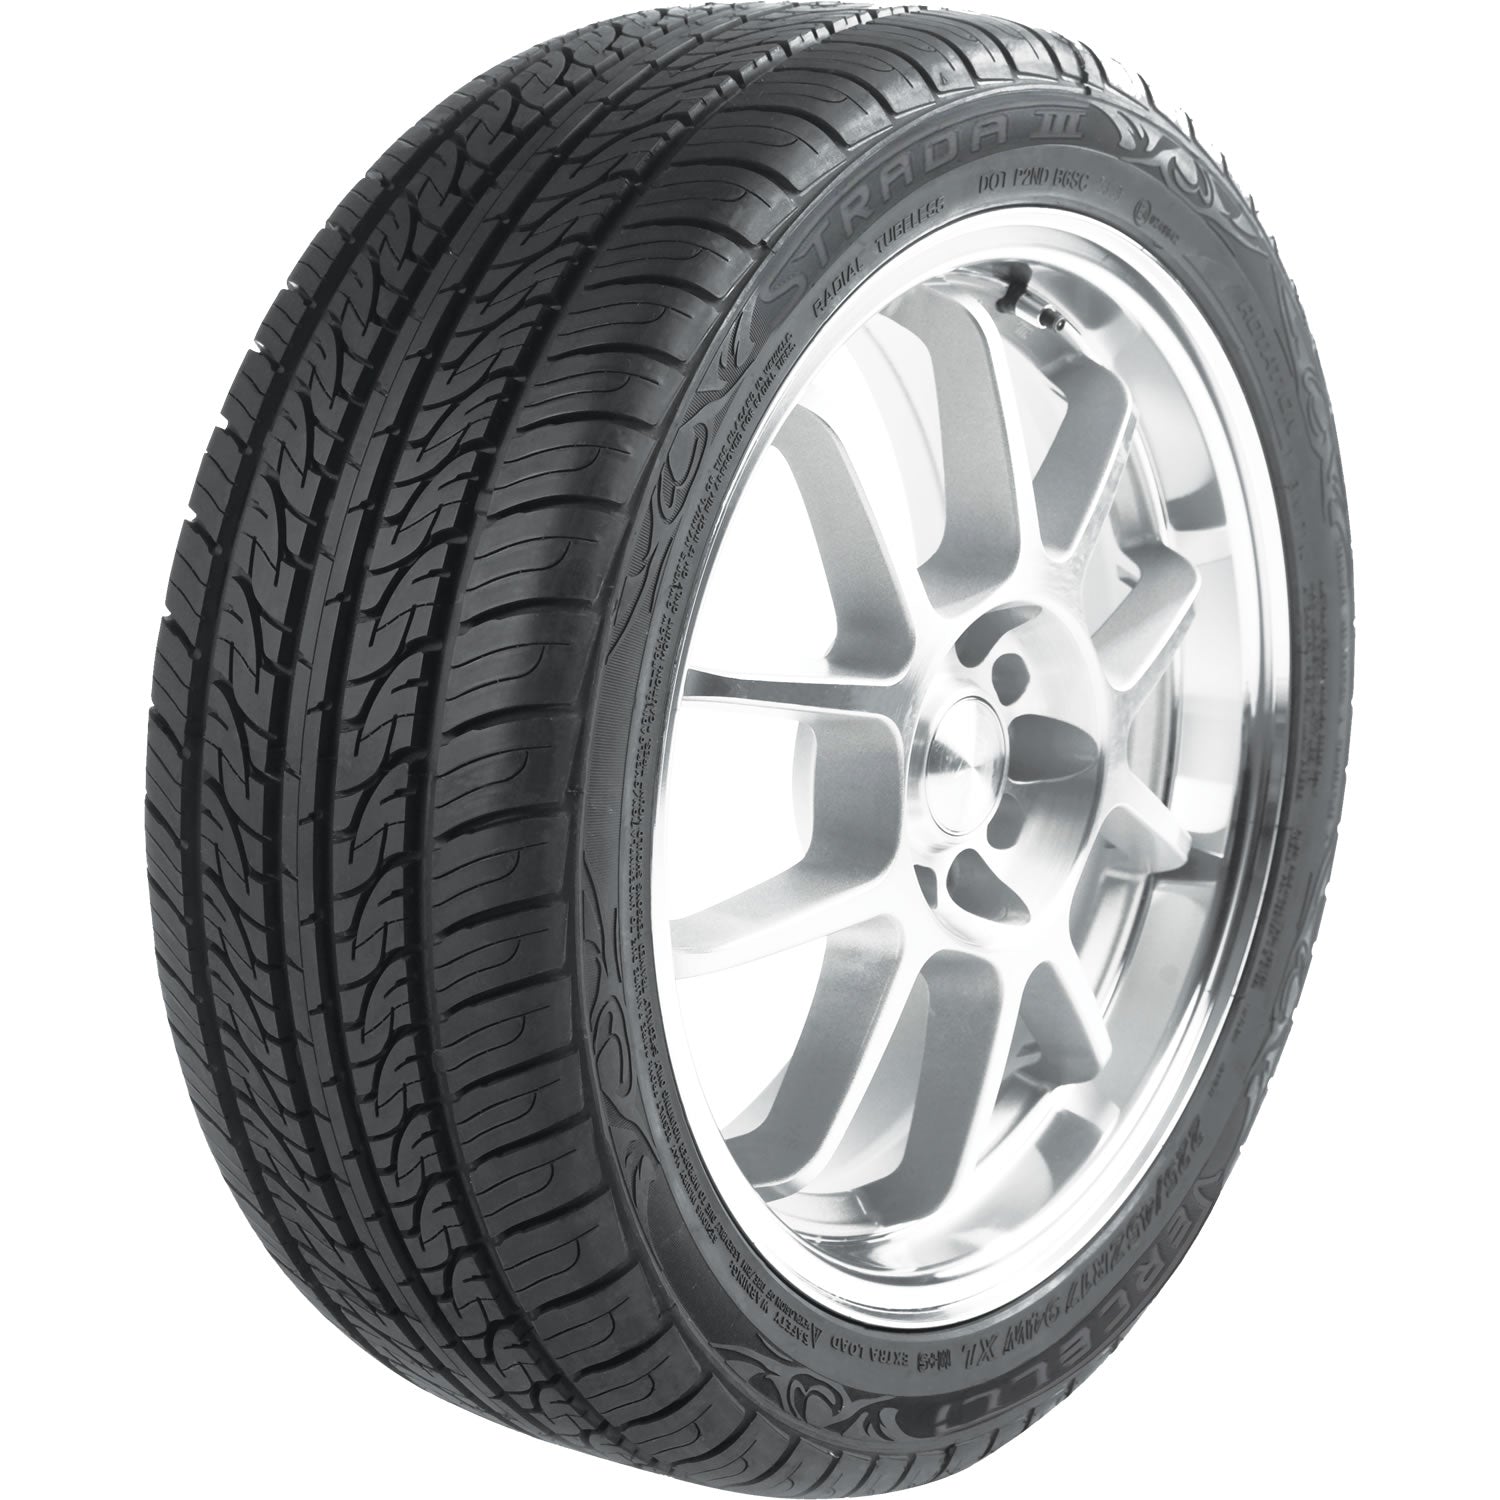 VERCELLI STRADA II 255/35ZR20 (27X10.2R 20) Tires